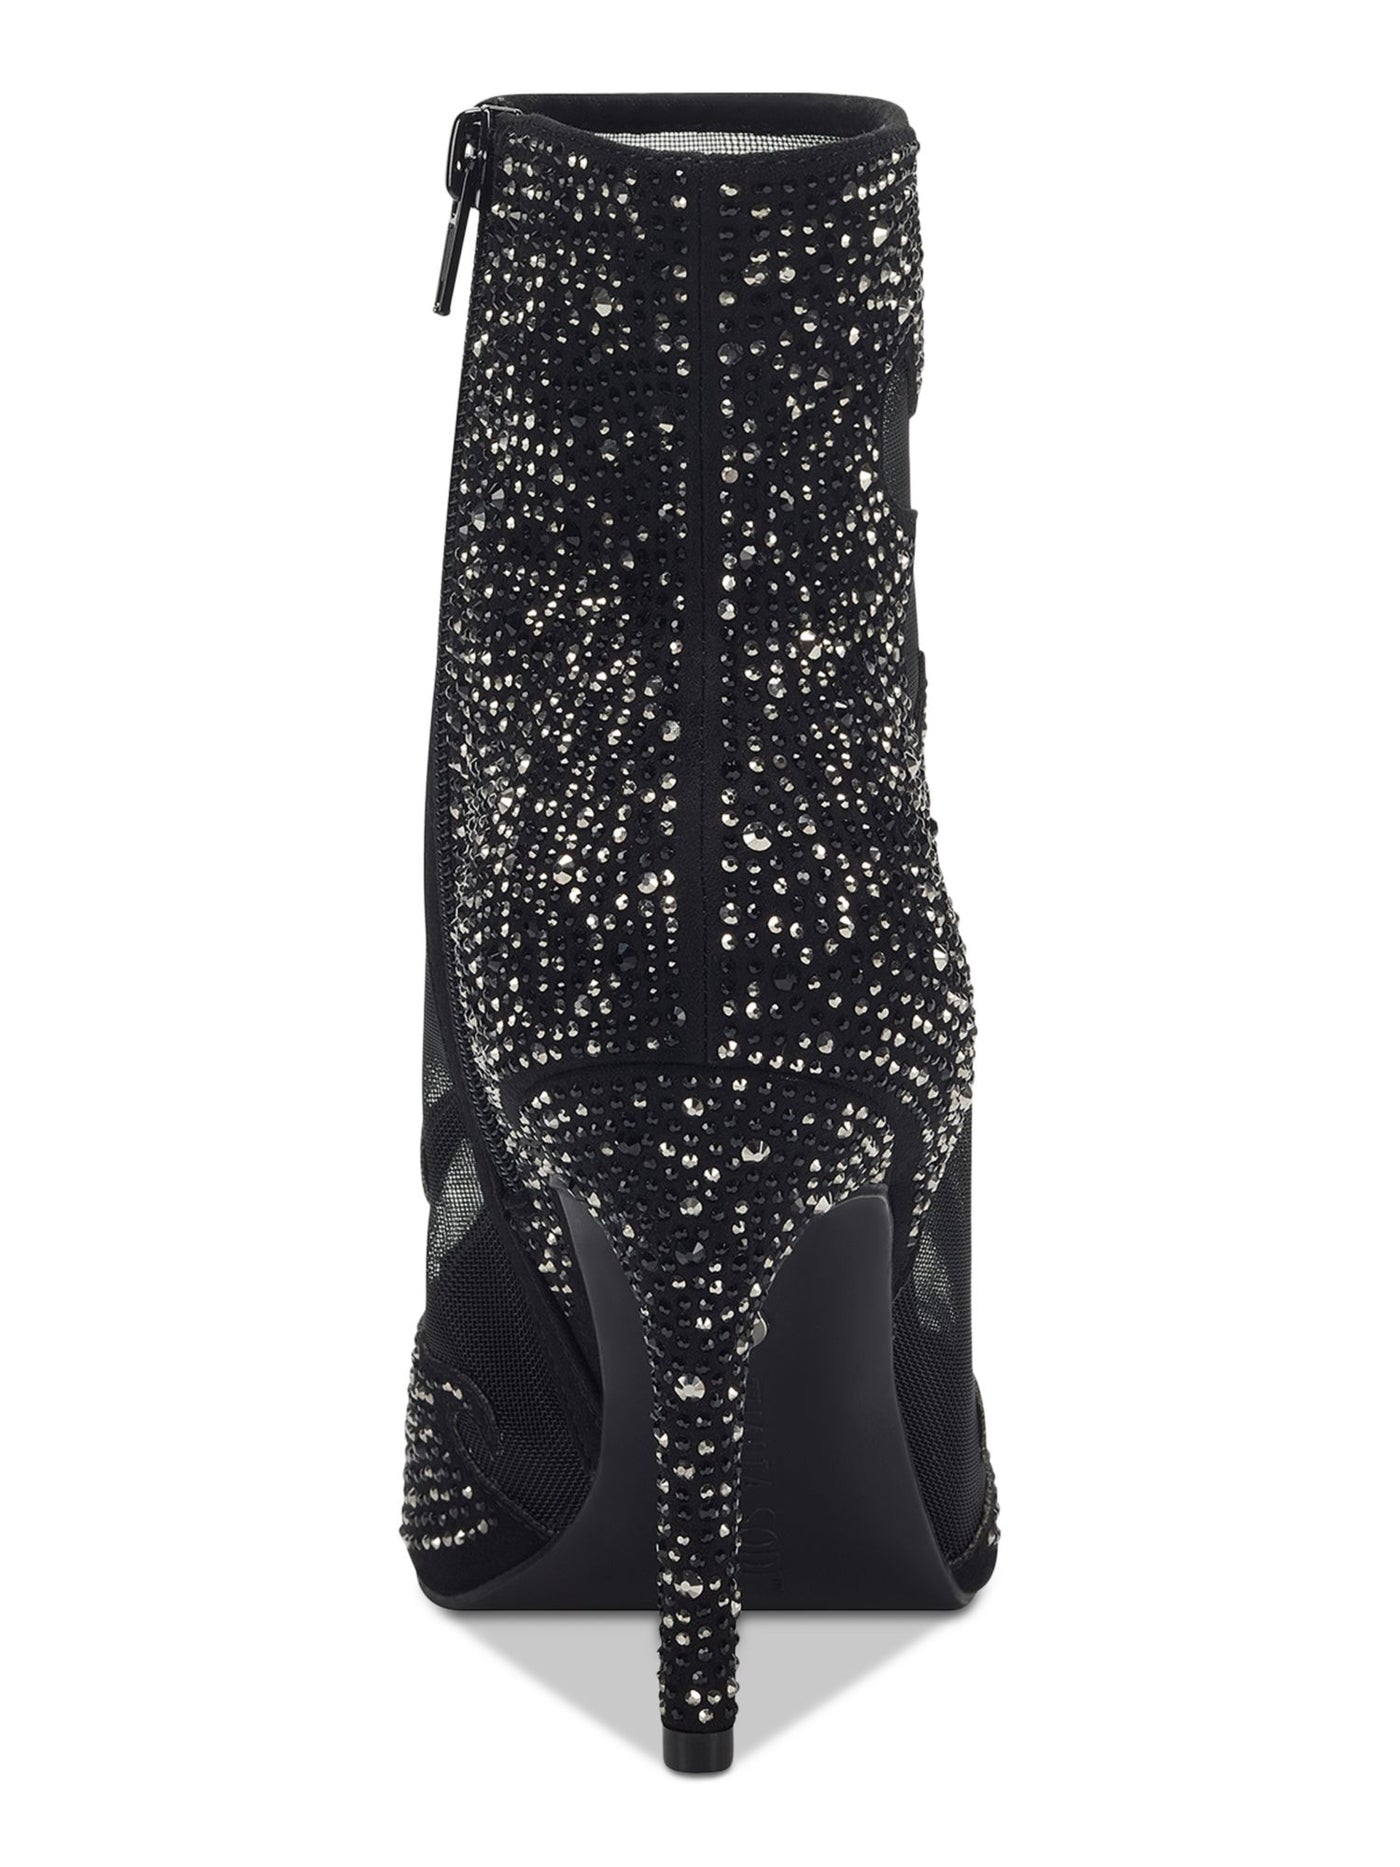 THALIA SODI Womens Black Mixed Media Rhinestone Embellished Rosanna Pointed Toe Stiletto Zip-Up Dress Booties 7 M